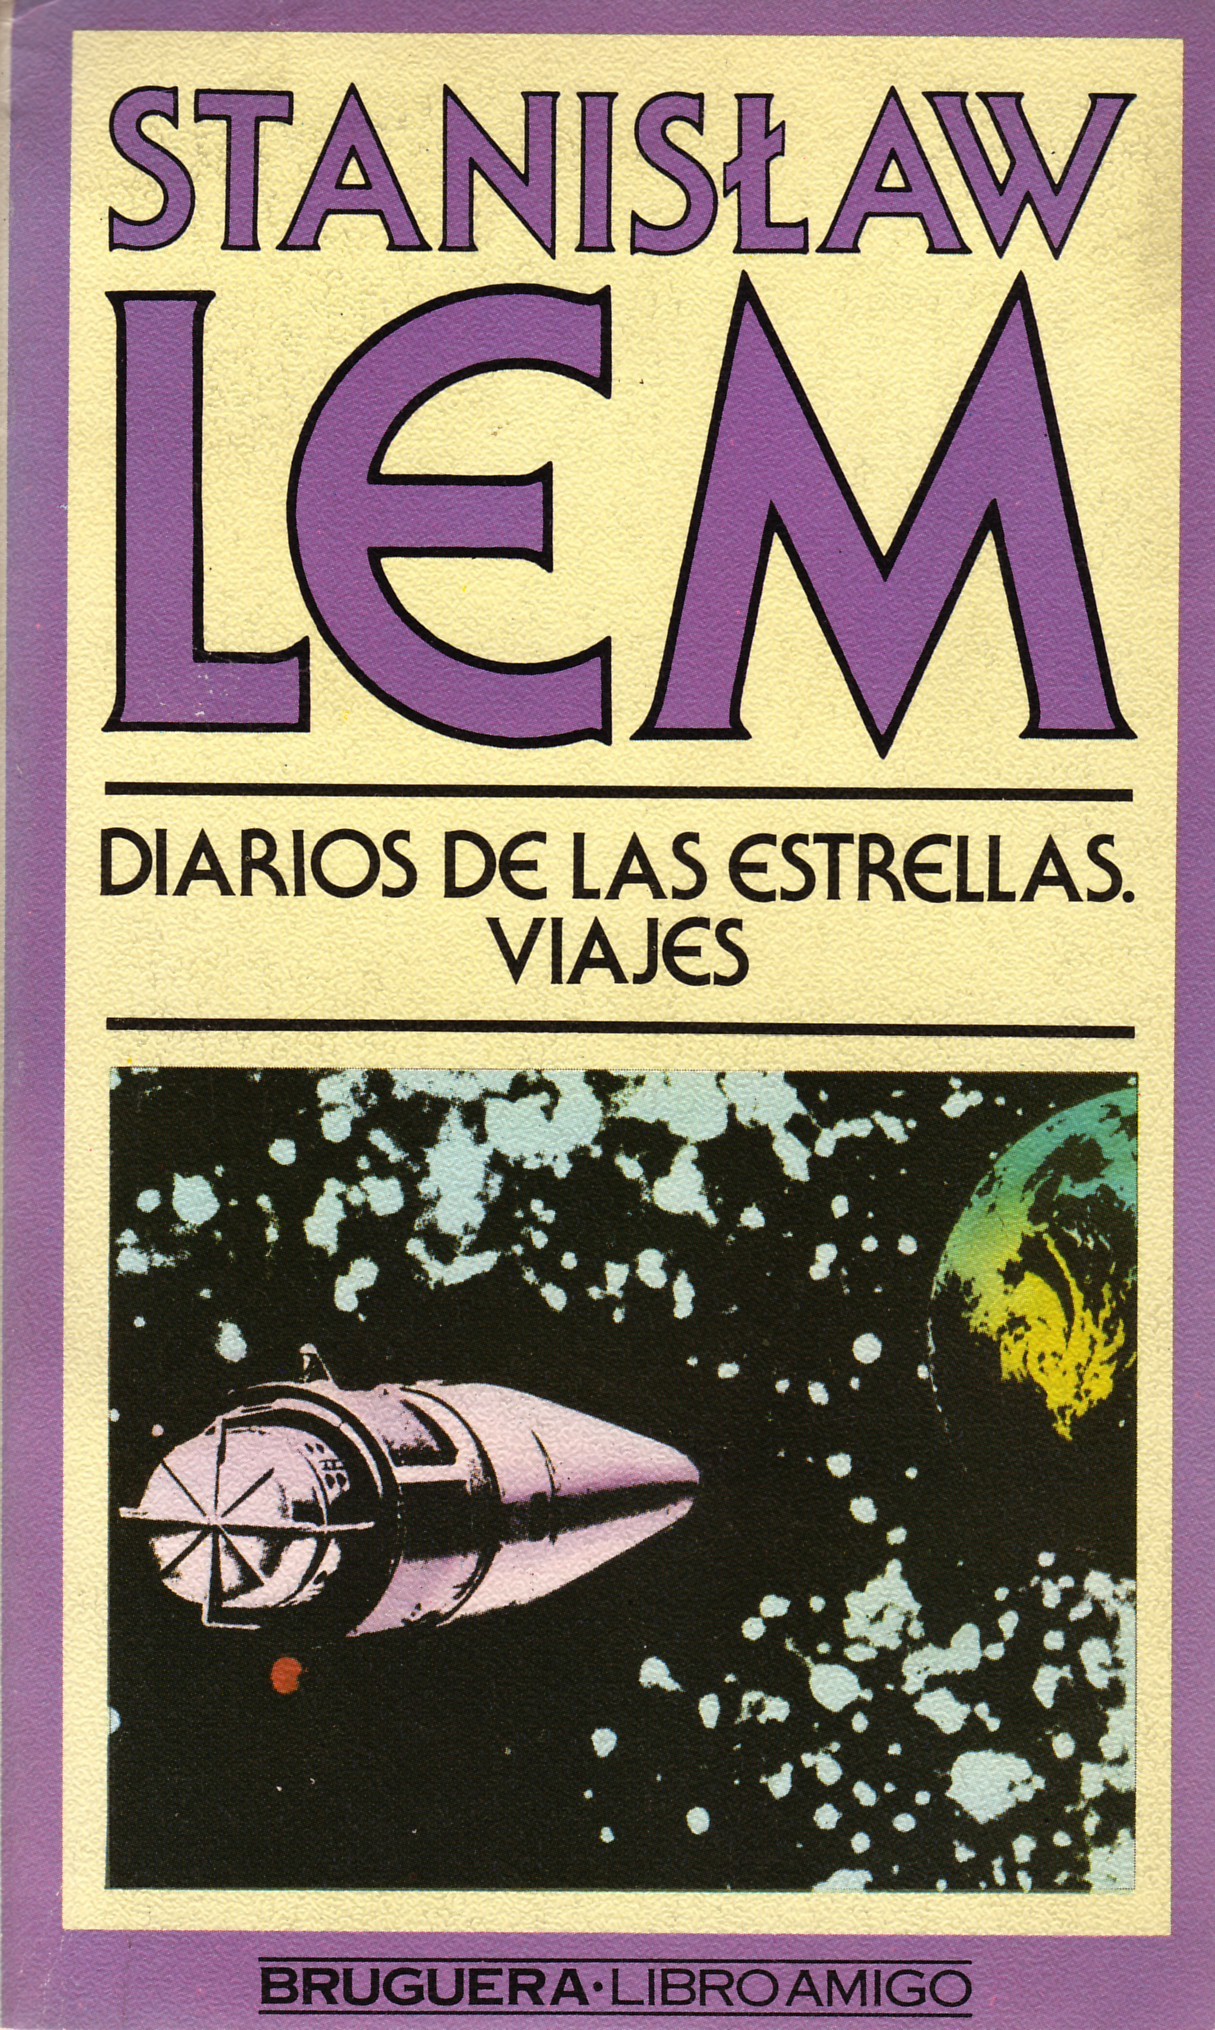 Star Diaries Spanish Bruguera 1979.jpg